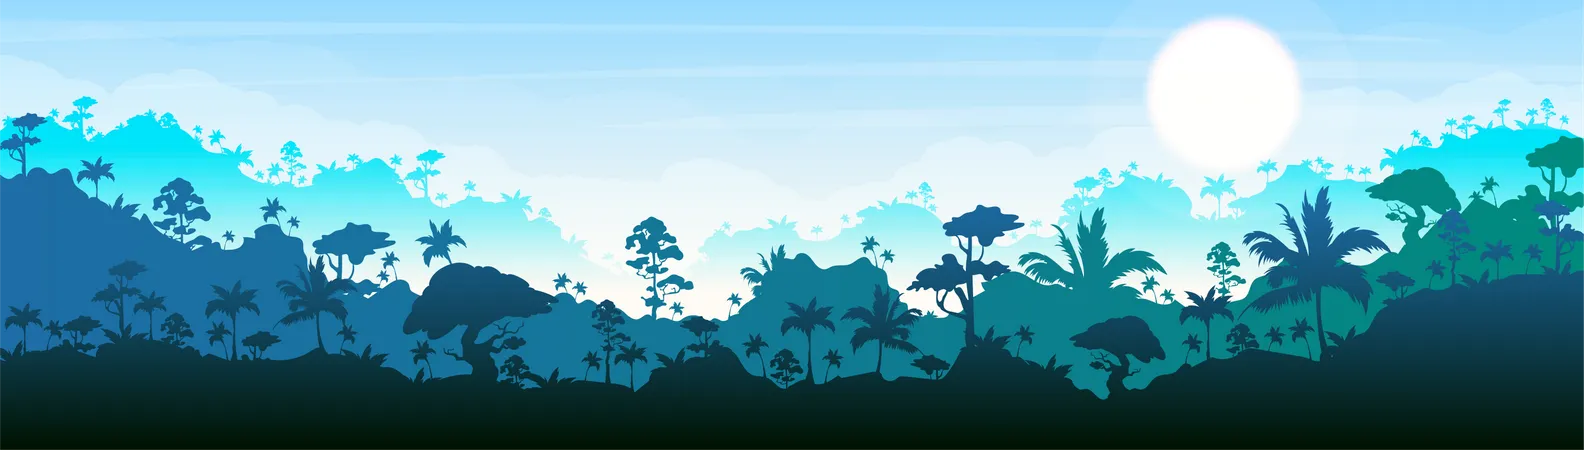 Ilustracion De Vector De Color Plano De Selva Paisaje De Bosque Azul Bosques Panoramicos Luminosos Naturaleza Escenica Tropical Entorno Idilico Paisaje De Dibujos Animados 2 D De Selva Tropical Con Capas En El Fondo Ilustración